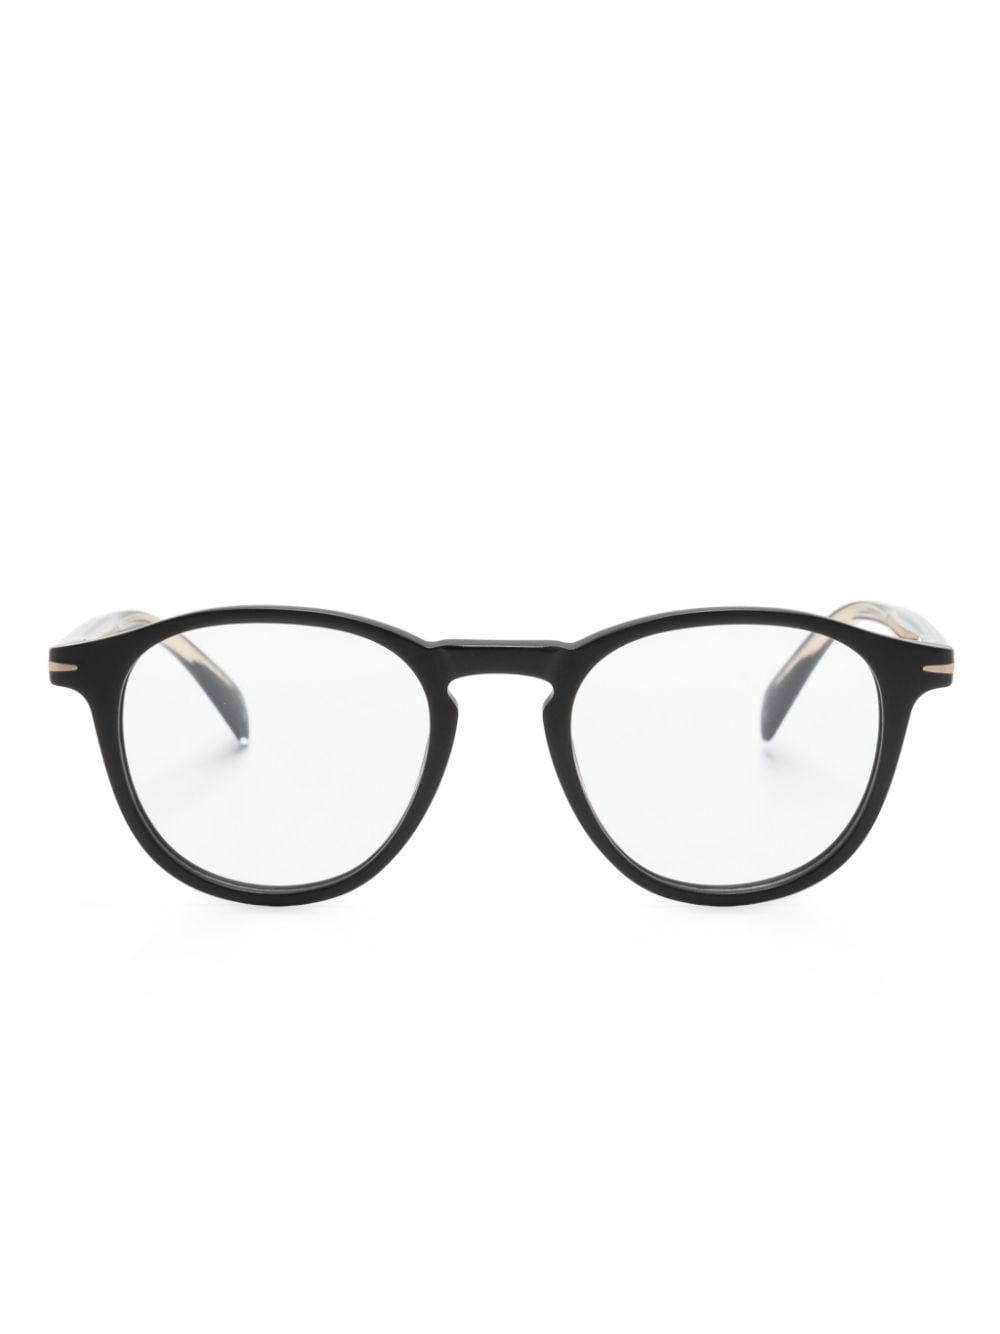 Eyewear By David Beckham Round-frame Glasses In Black